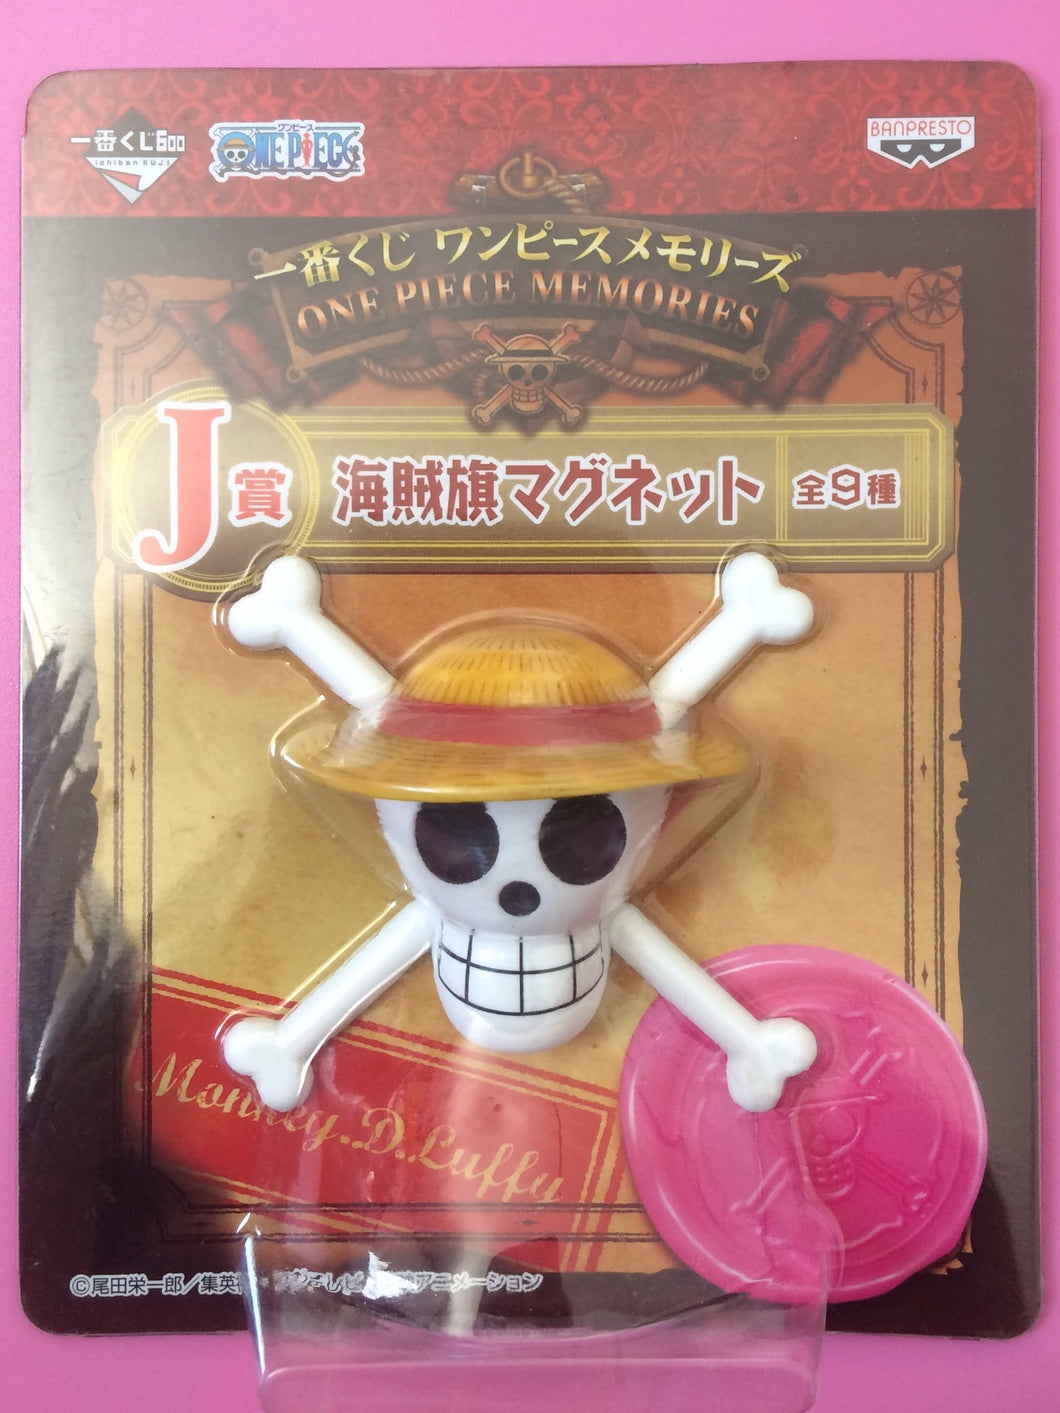 Ichiban Kuji One Piece Memories - Magnet Collection